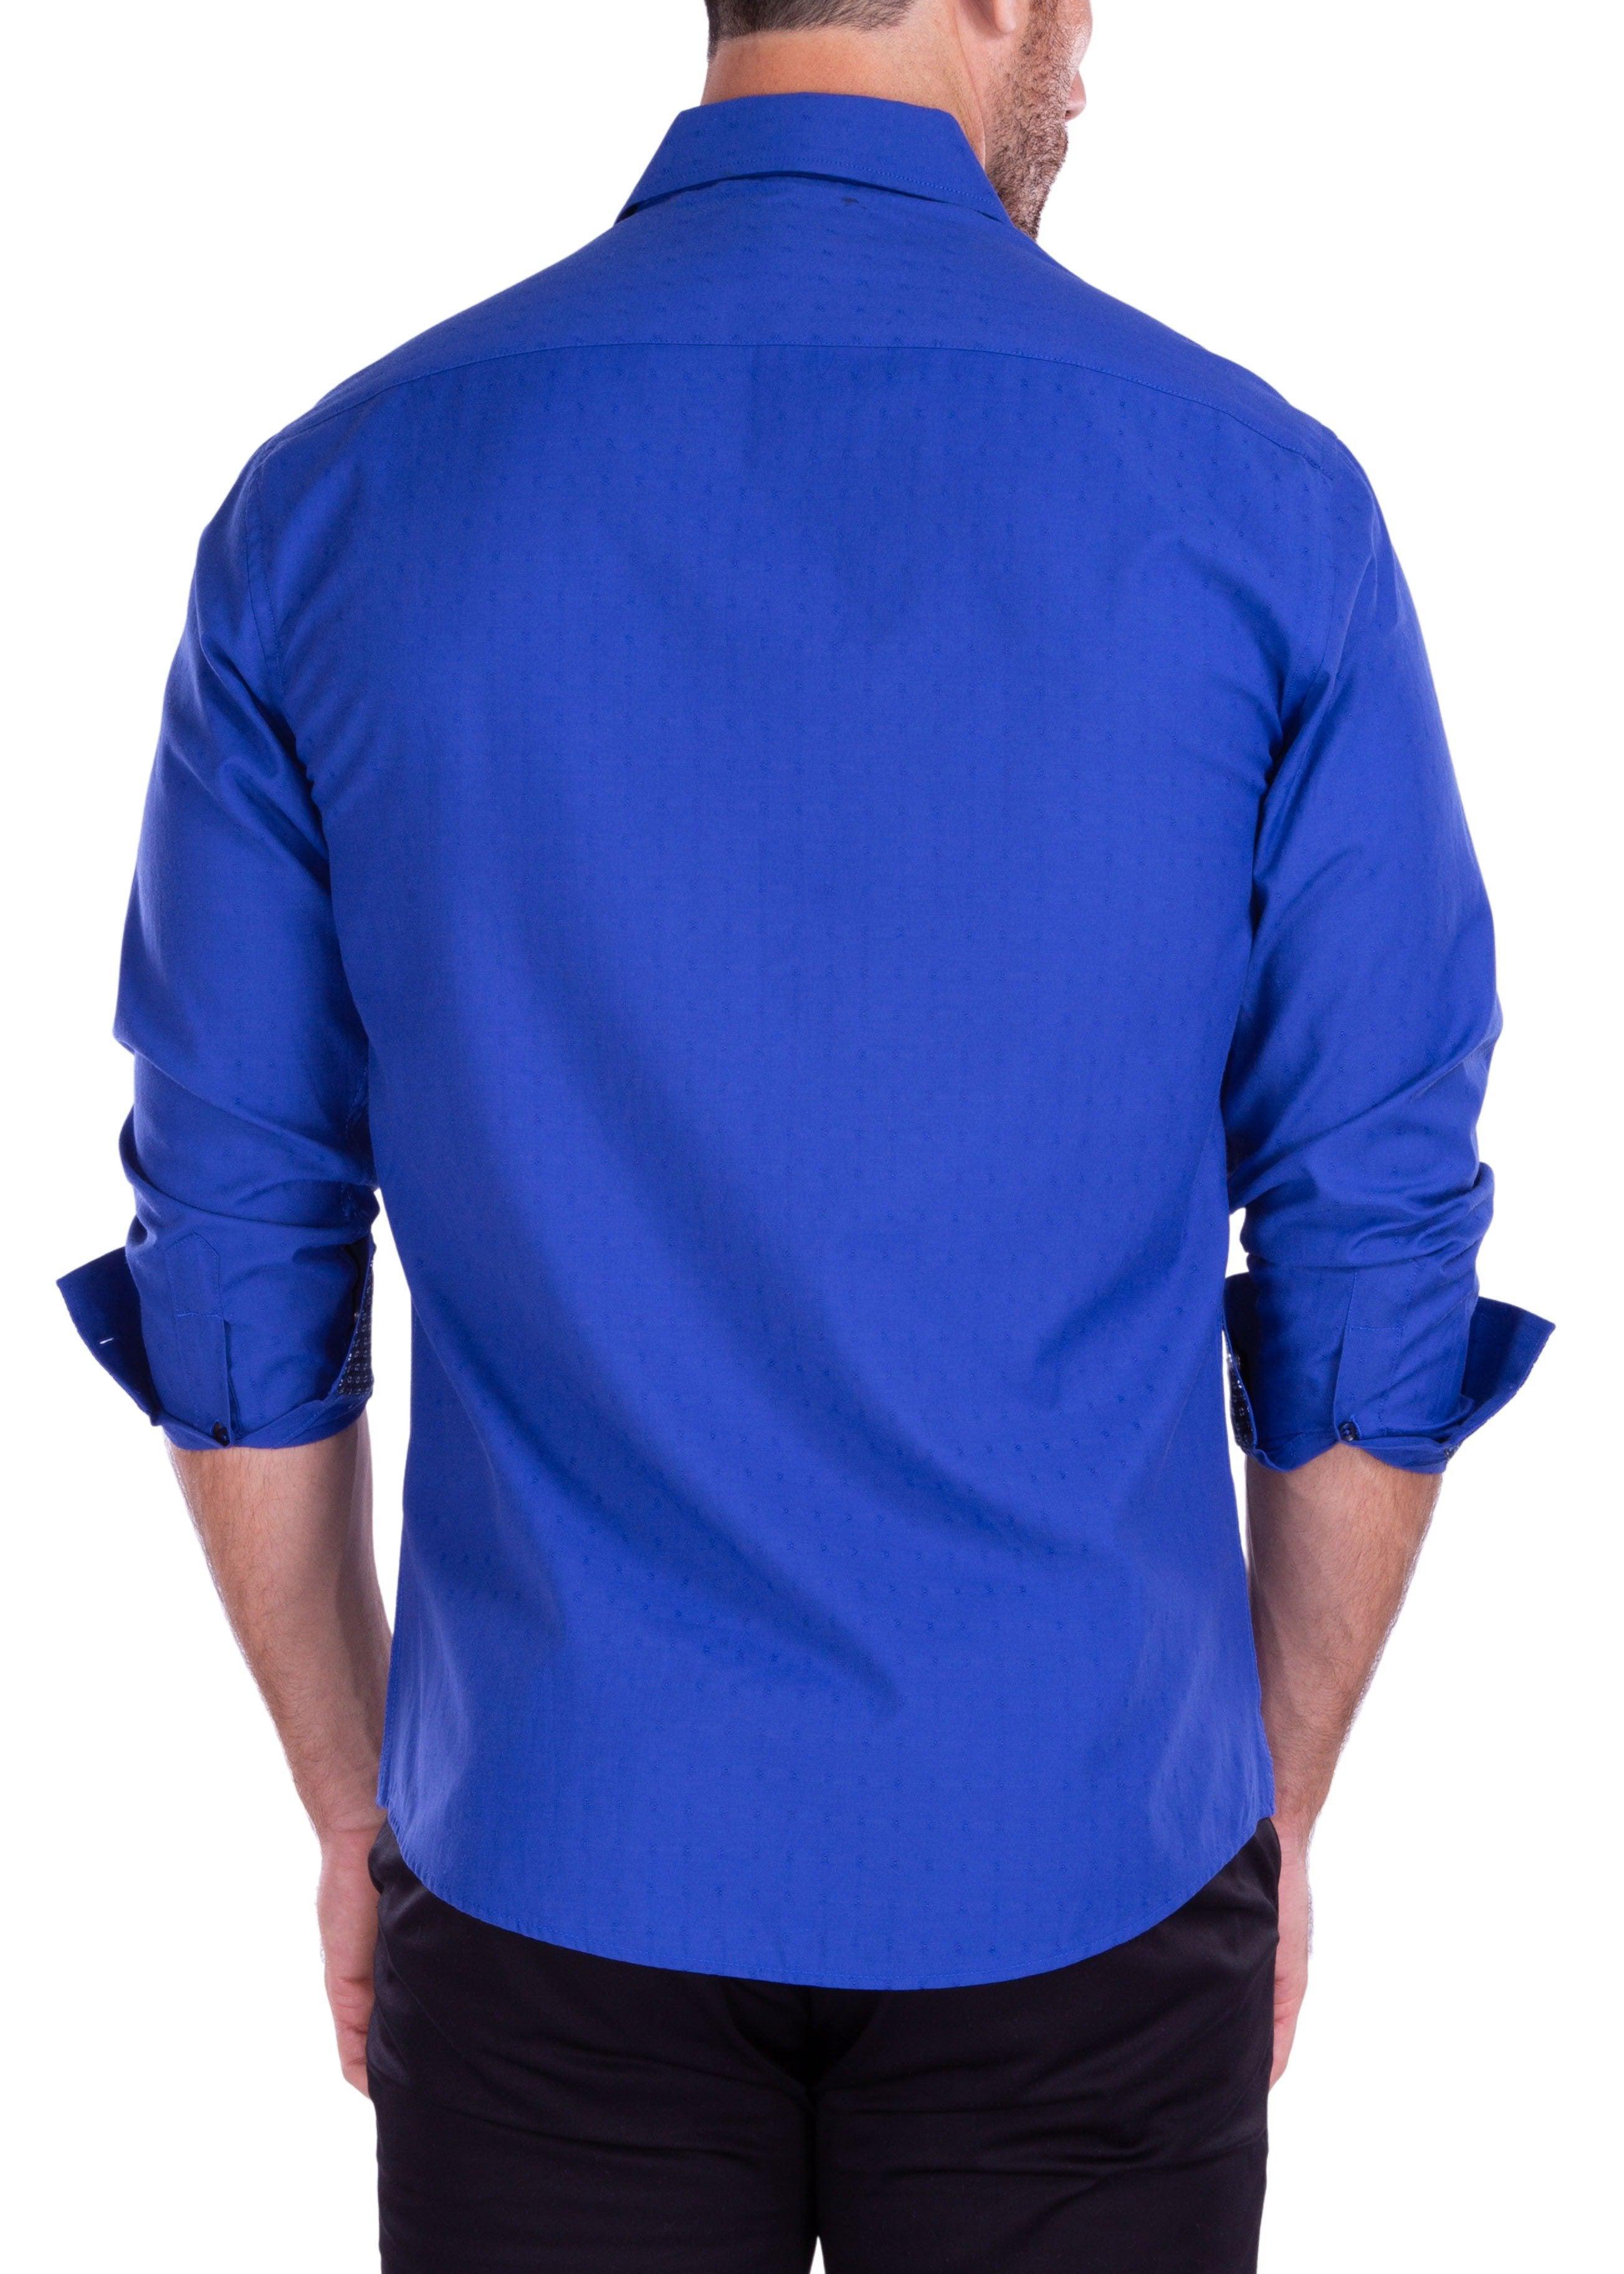 Dotted Texture Long Sleeve Dress Shirt Solid Royal Blue– BESPOKE MODA